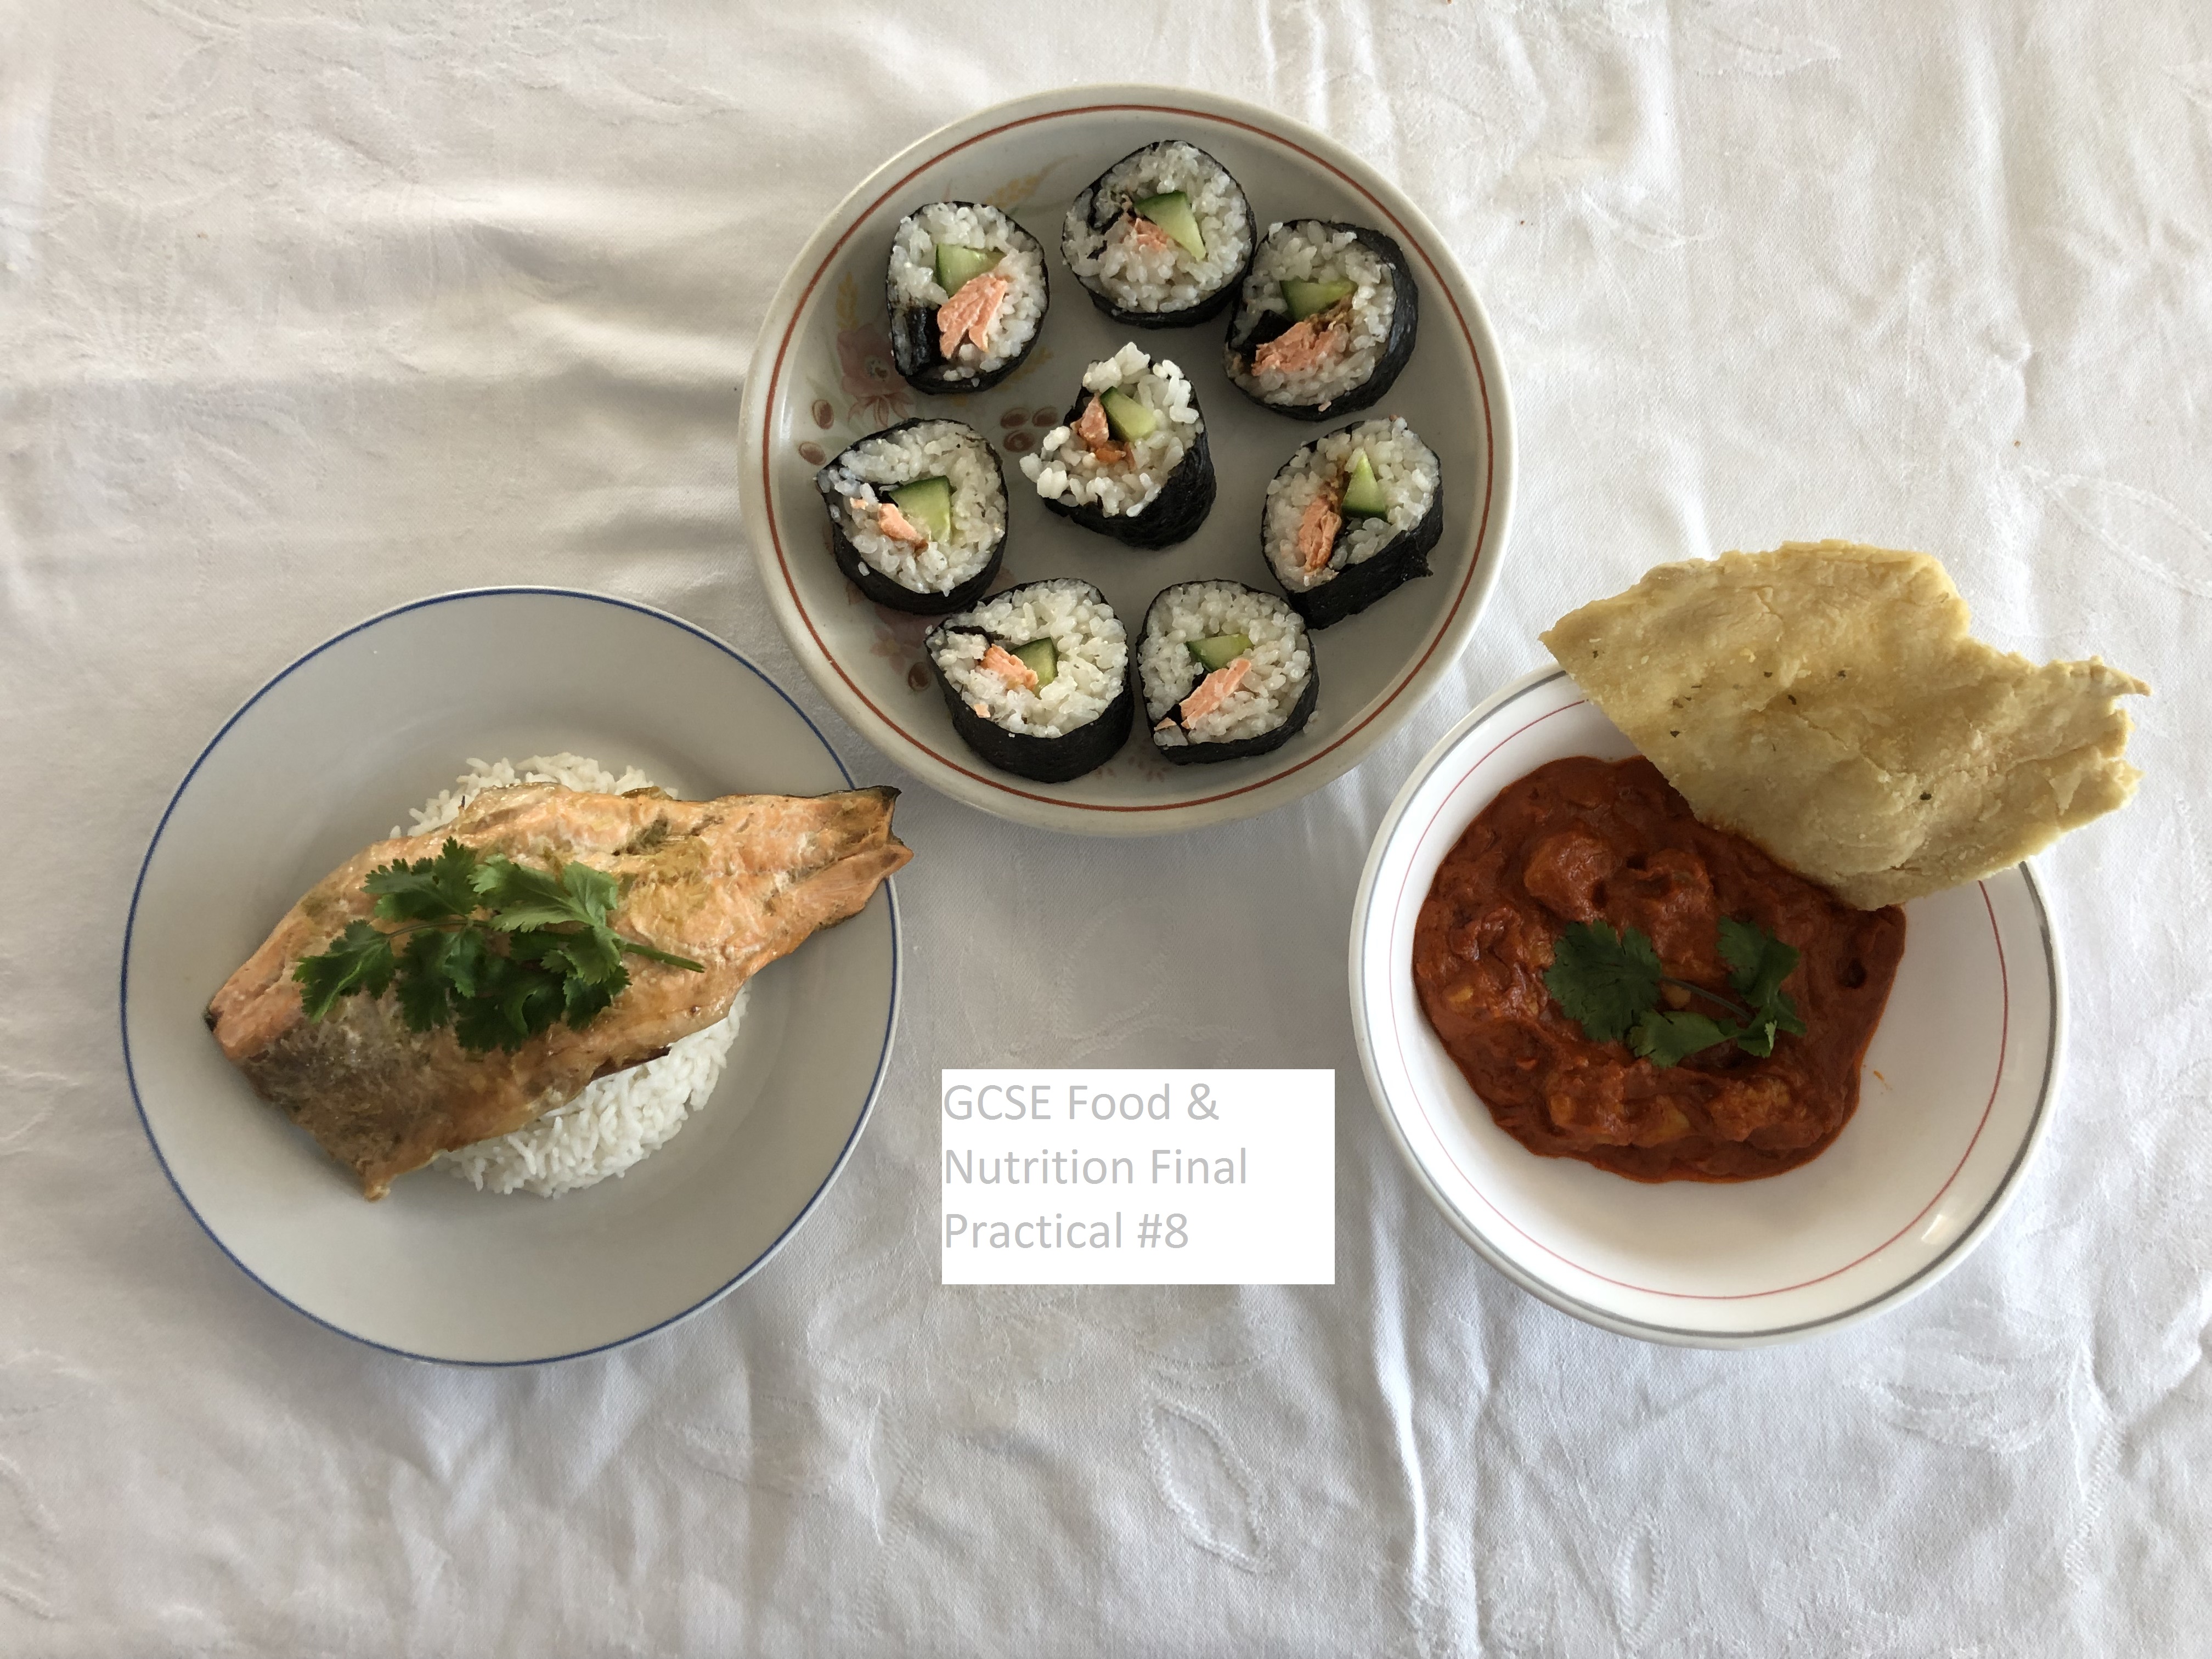 GCSE Food & Nutrition 08